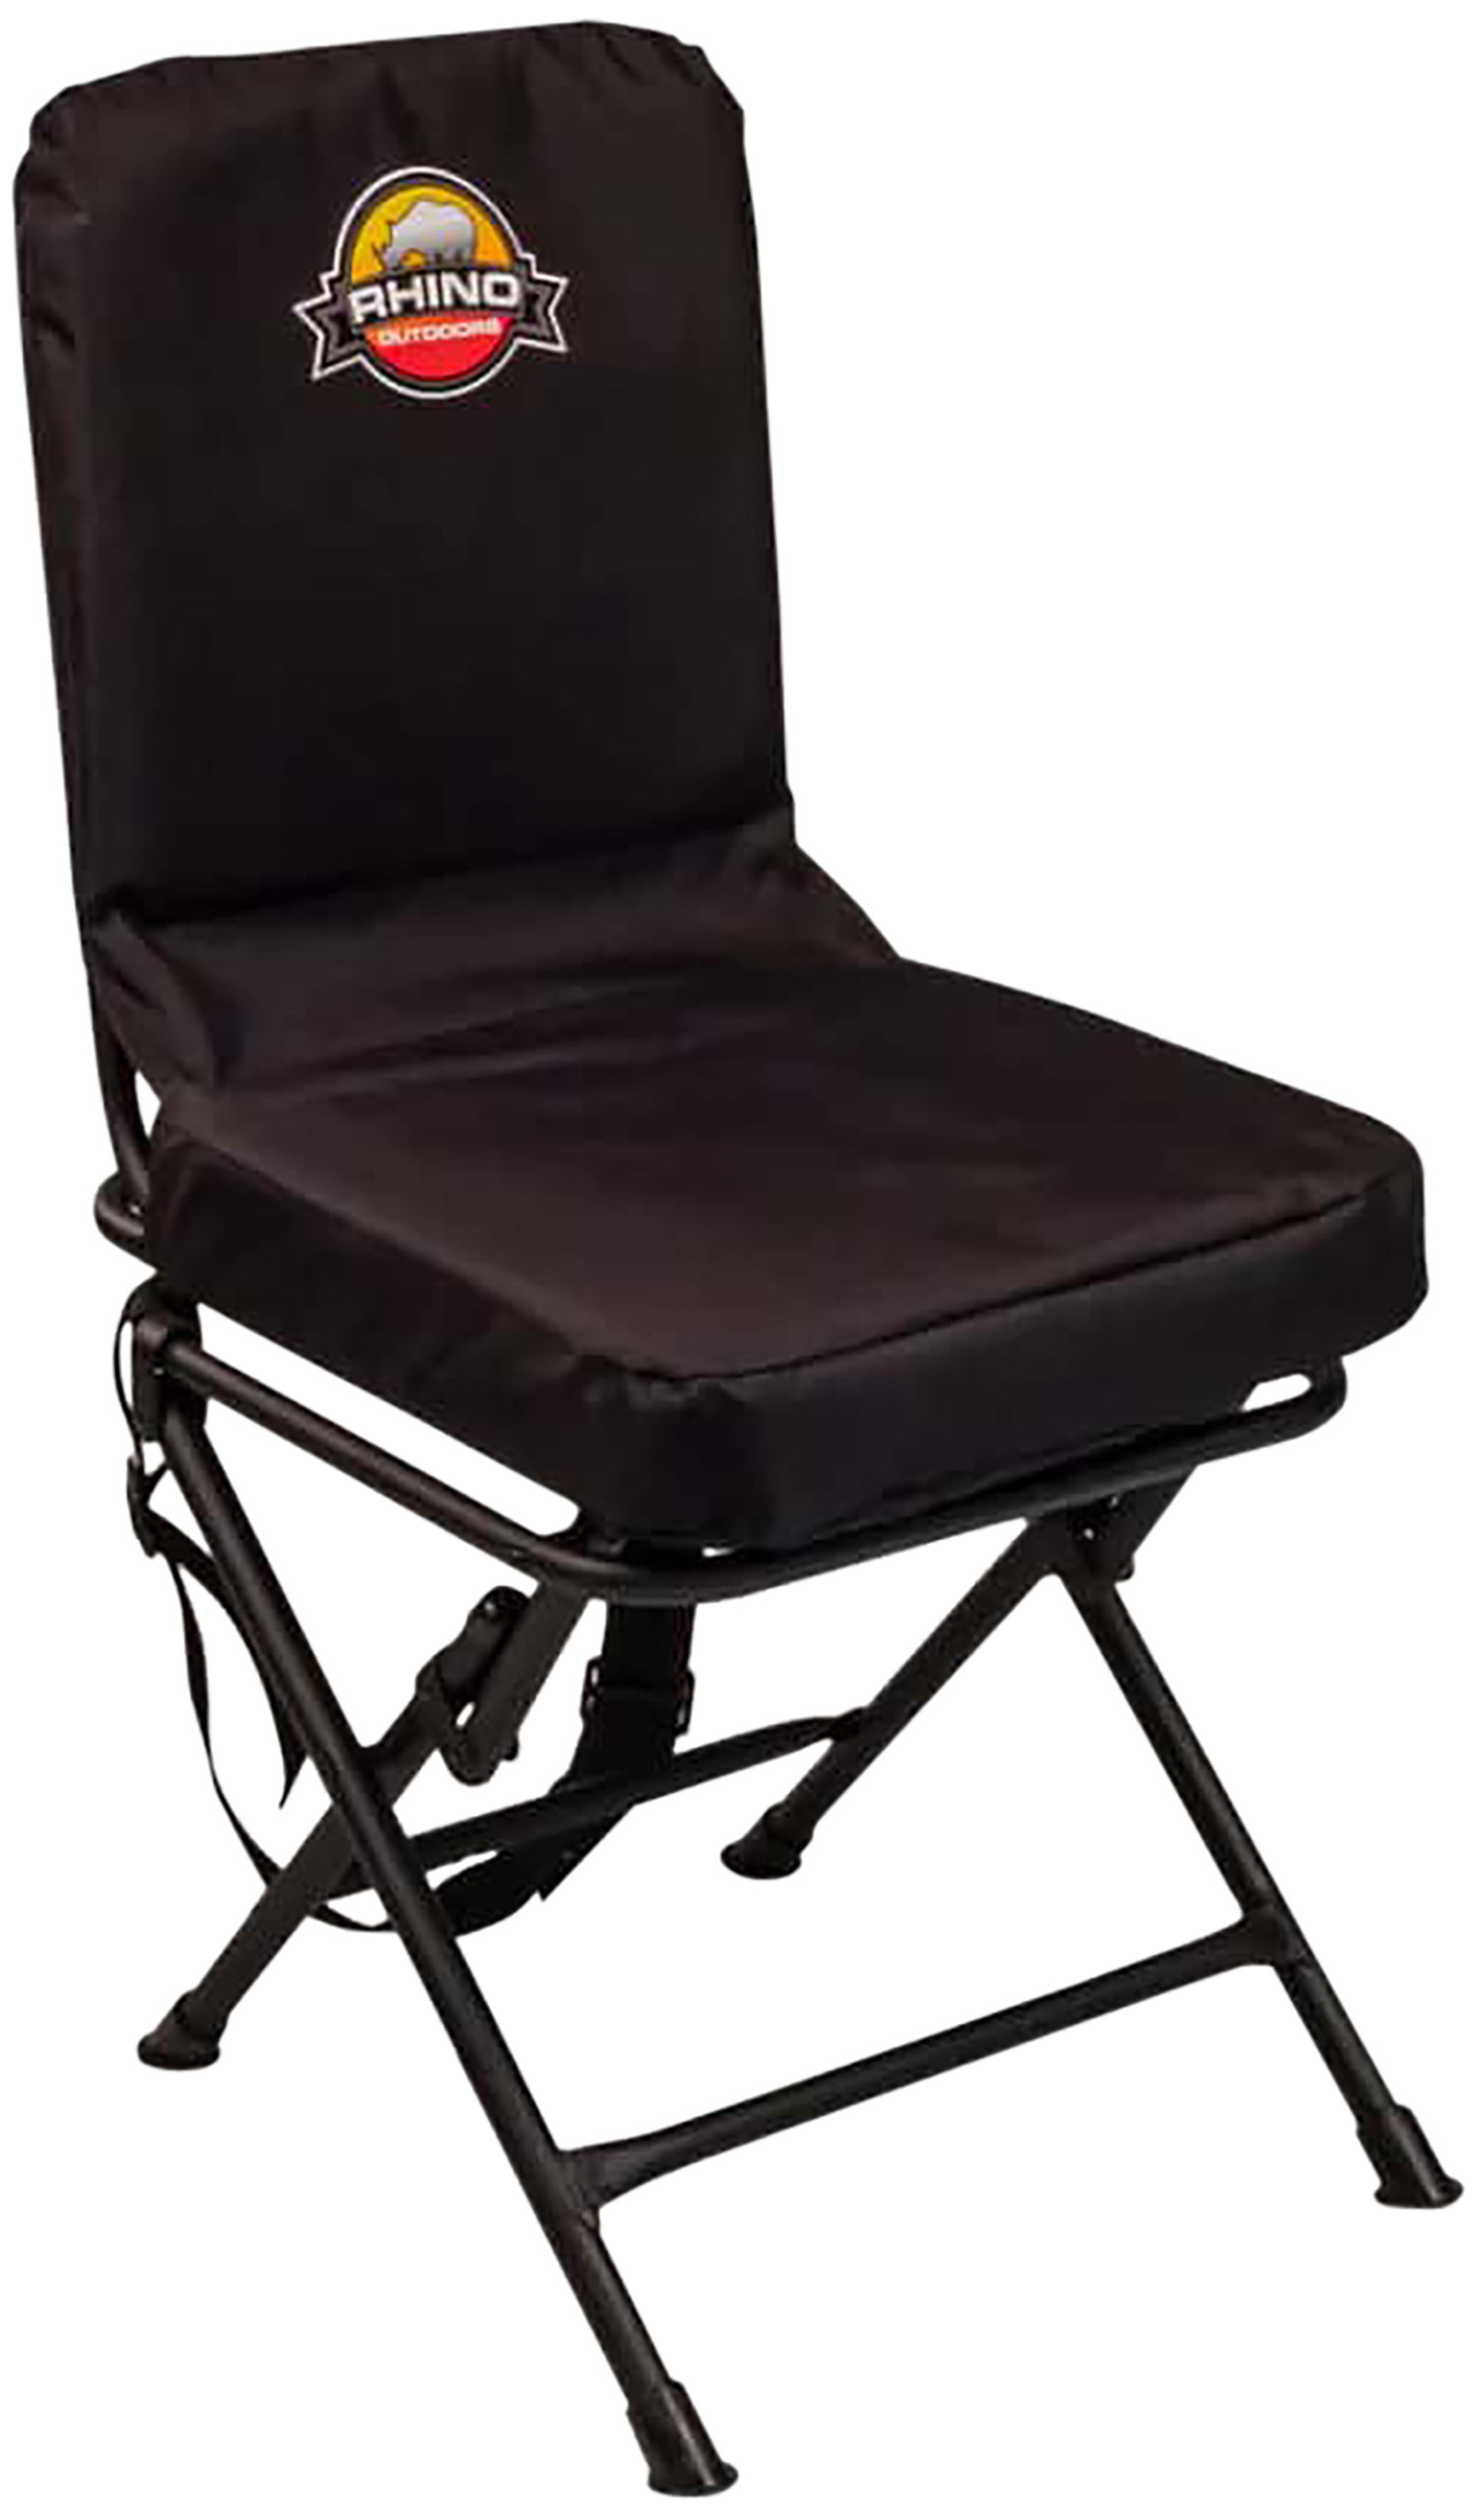 Rhino Blinds Rc2281 Padded Swivel Hunting Chair 360 Degree Swivel Black 600D Polyester